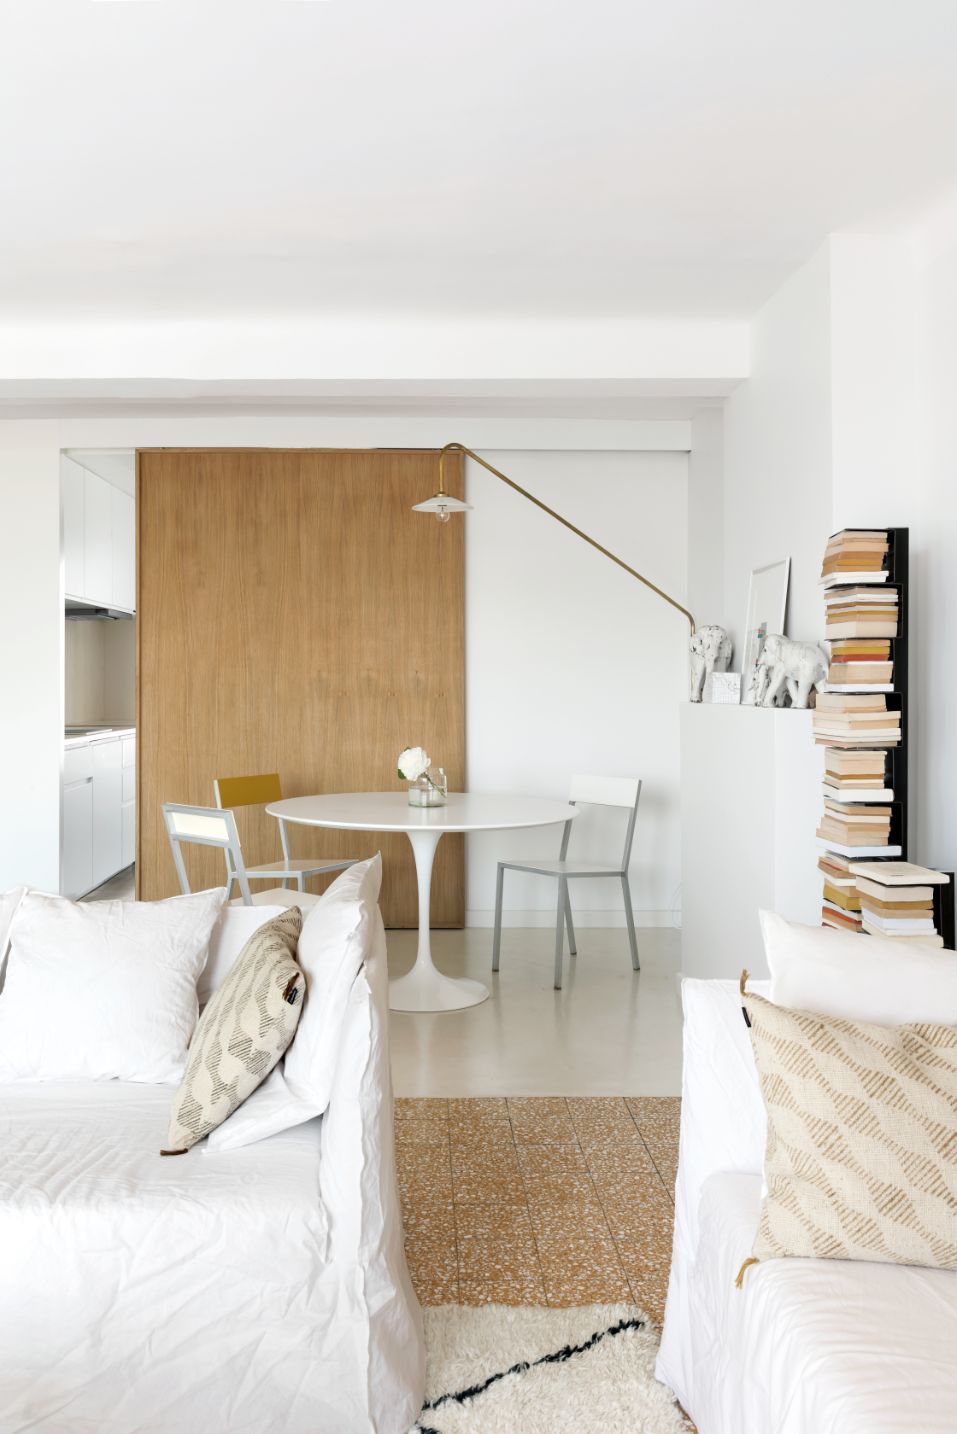 Contact an interior designer in Marseille and in Bouches du Rhône